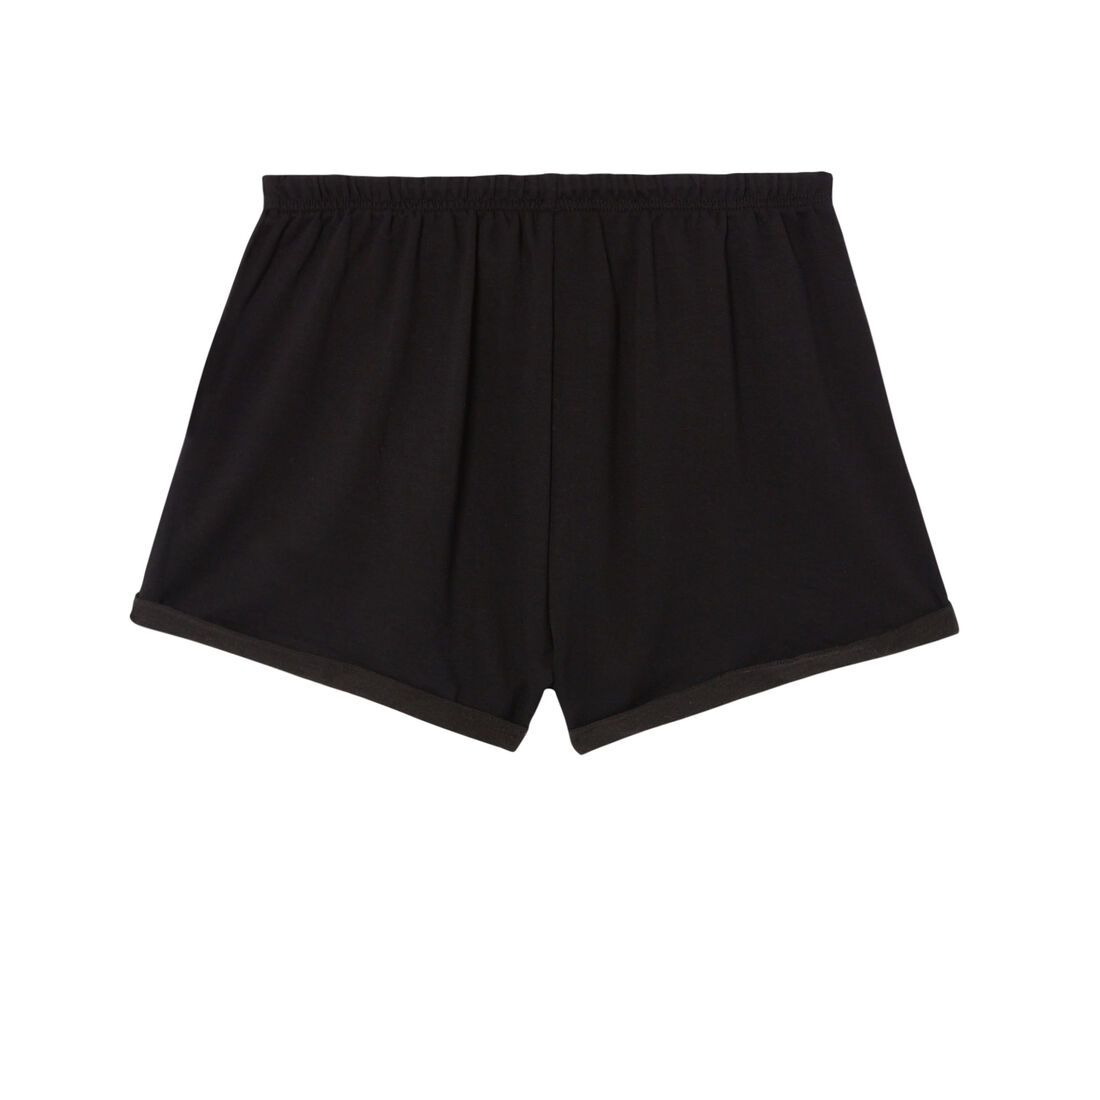 plain shorts with drawstring detail  - black;